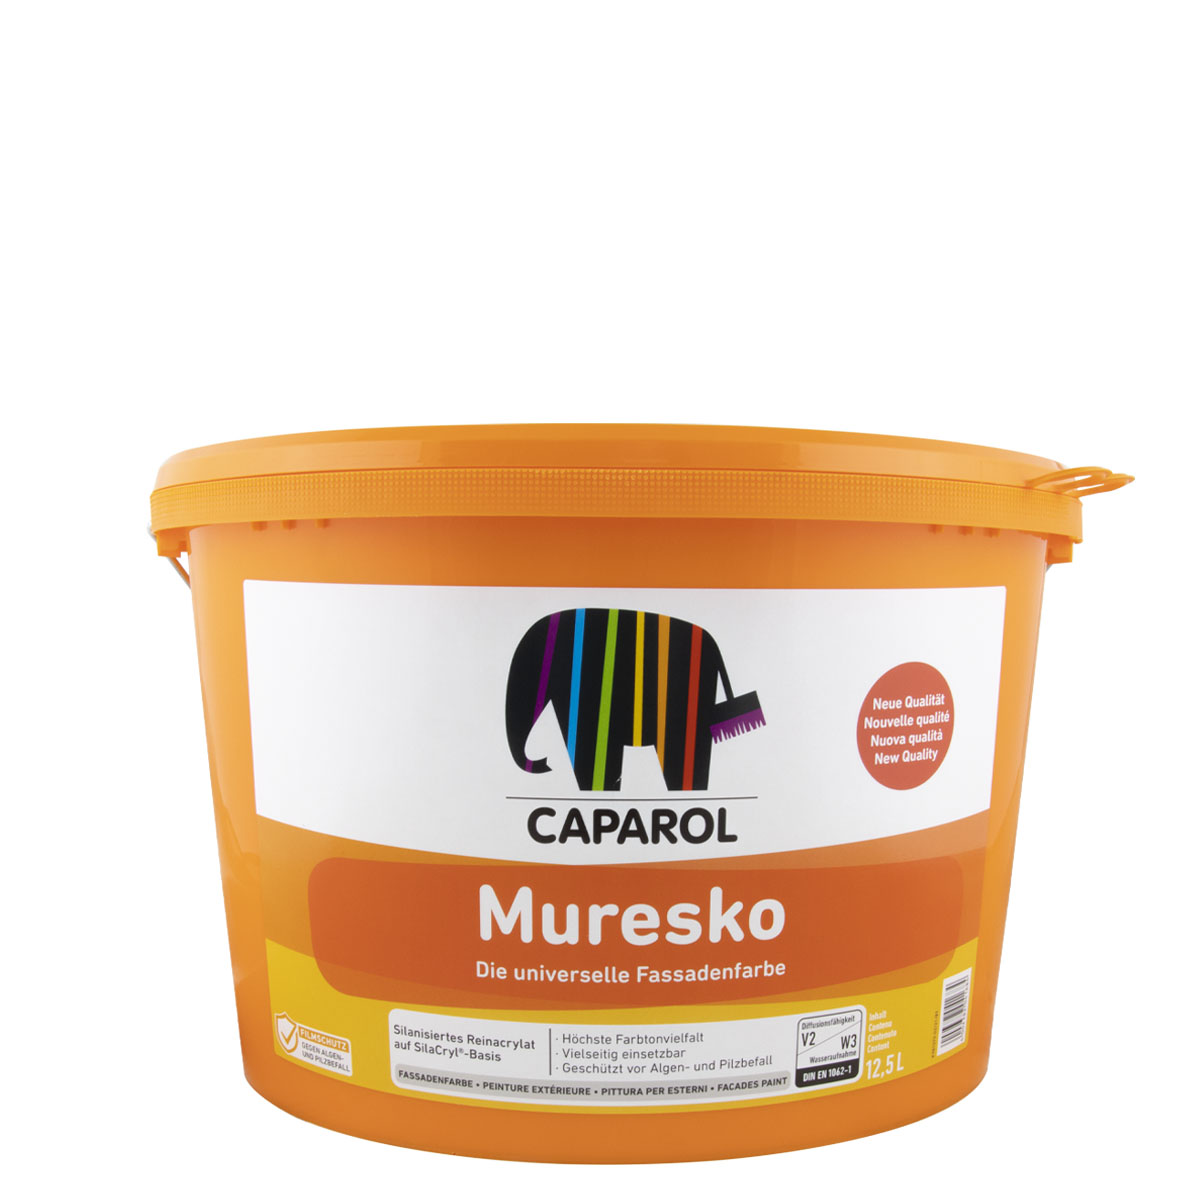 Caparol Muresko SilaCryl Fassadenfarbe 12,5L Weiss, Reinacrylat-Fassadenfarbe